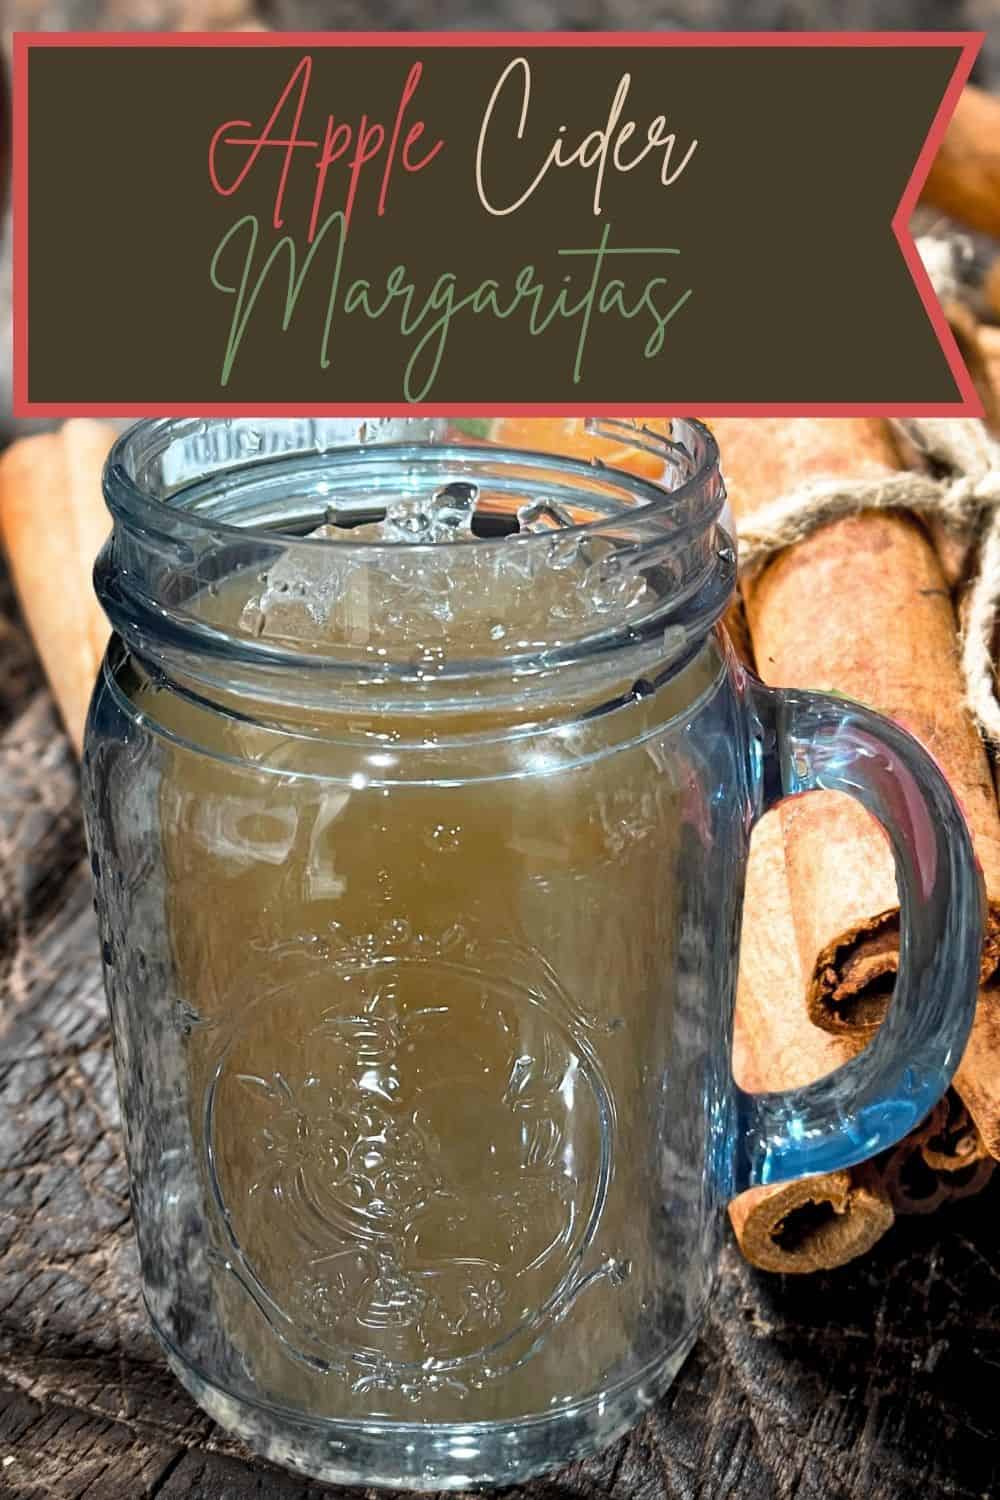 Apple Cider Margarita in glass with cinnamon sticks behind